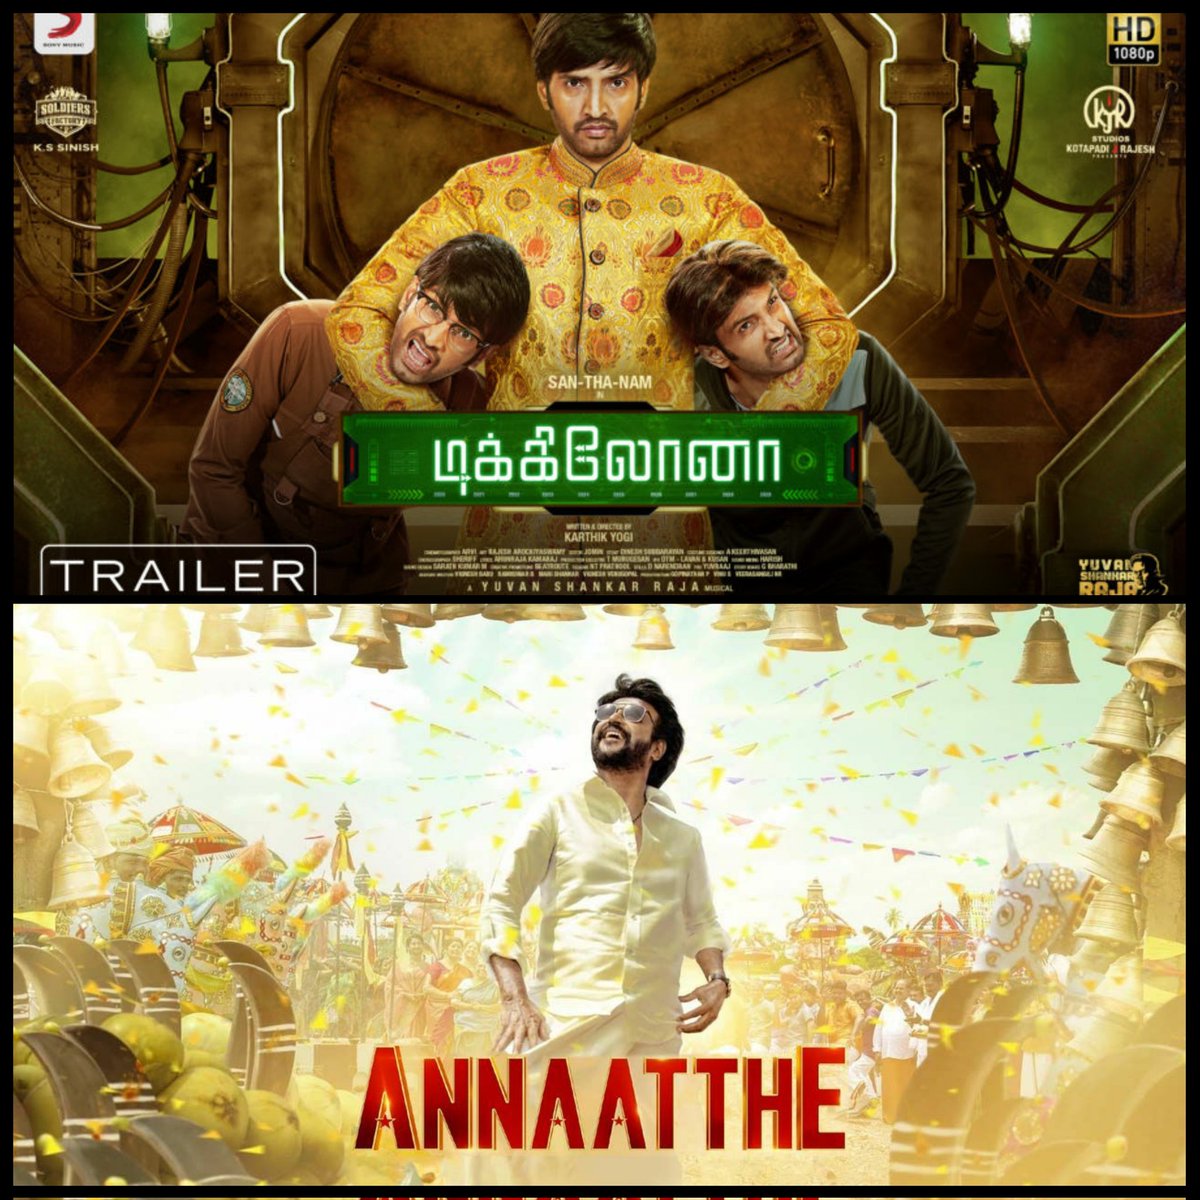 2021's Top 5 Highest Grossing Tamil Movies : 

1. Master 
2. Doctor 
3. Karnan 
4. DIKKILOONA  
5. Annathe